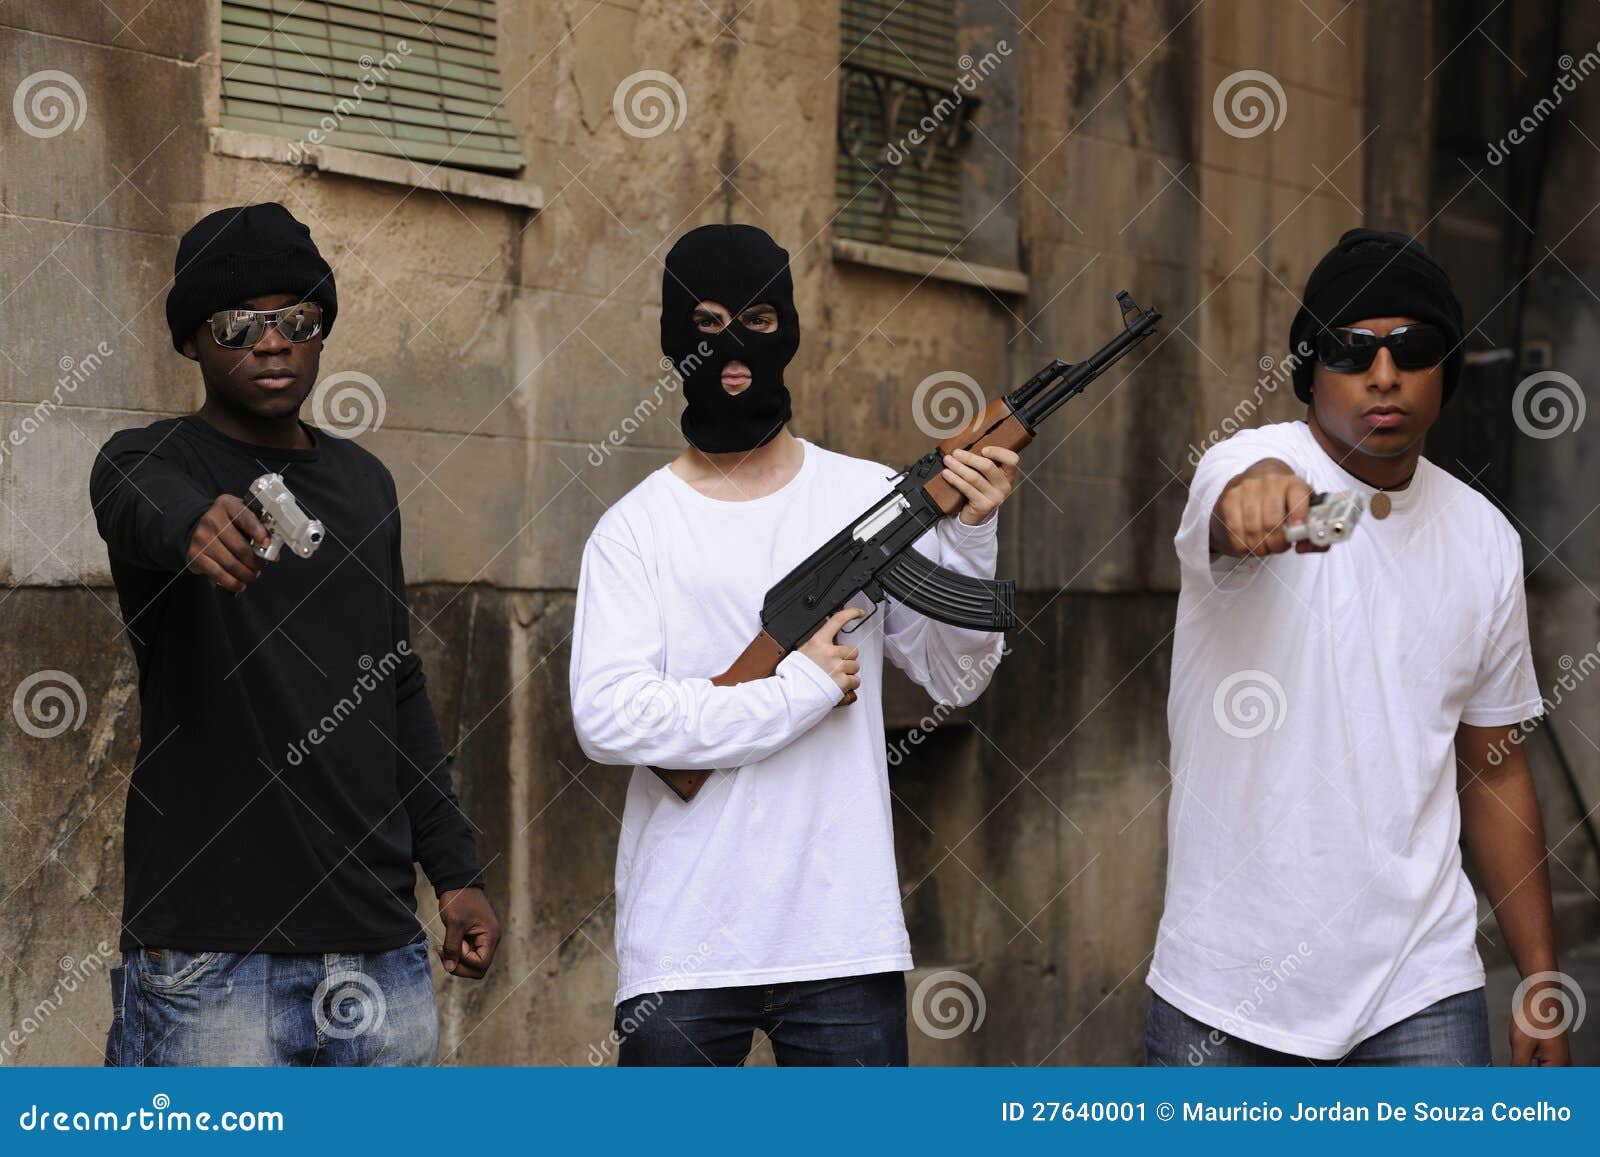 gang-members-guns-rifle-27640001.jpg